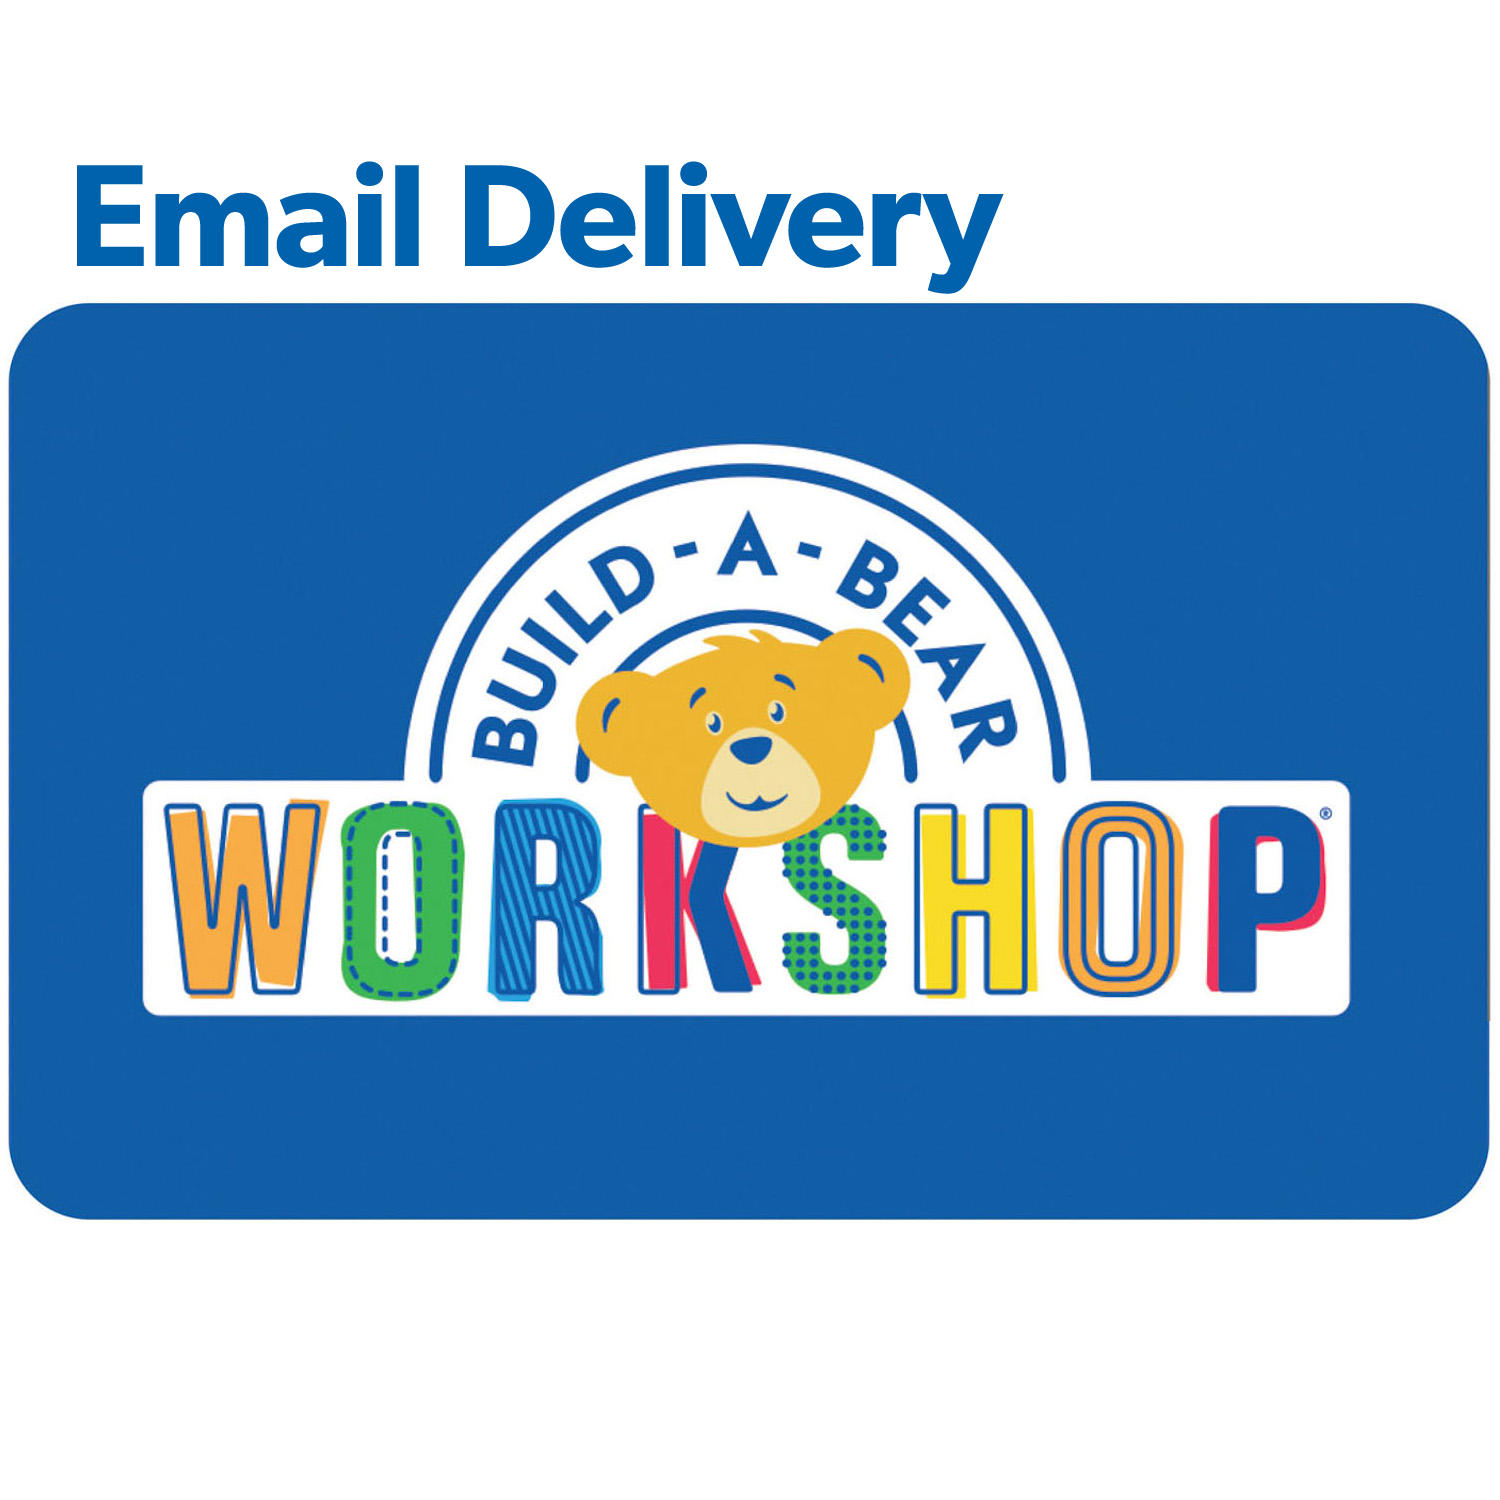 Build-A-Bear Workshop $50 eGift Card (Email Delivery)